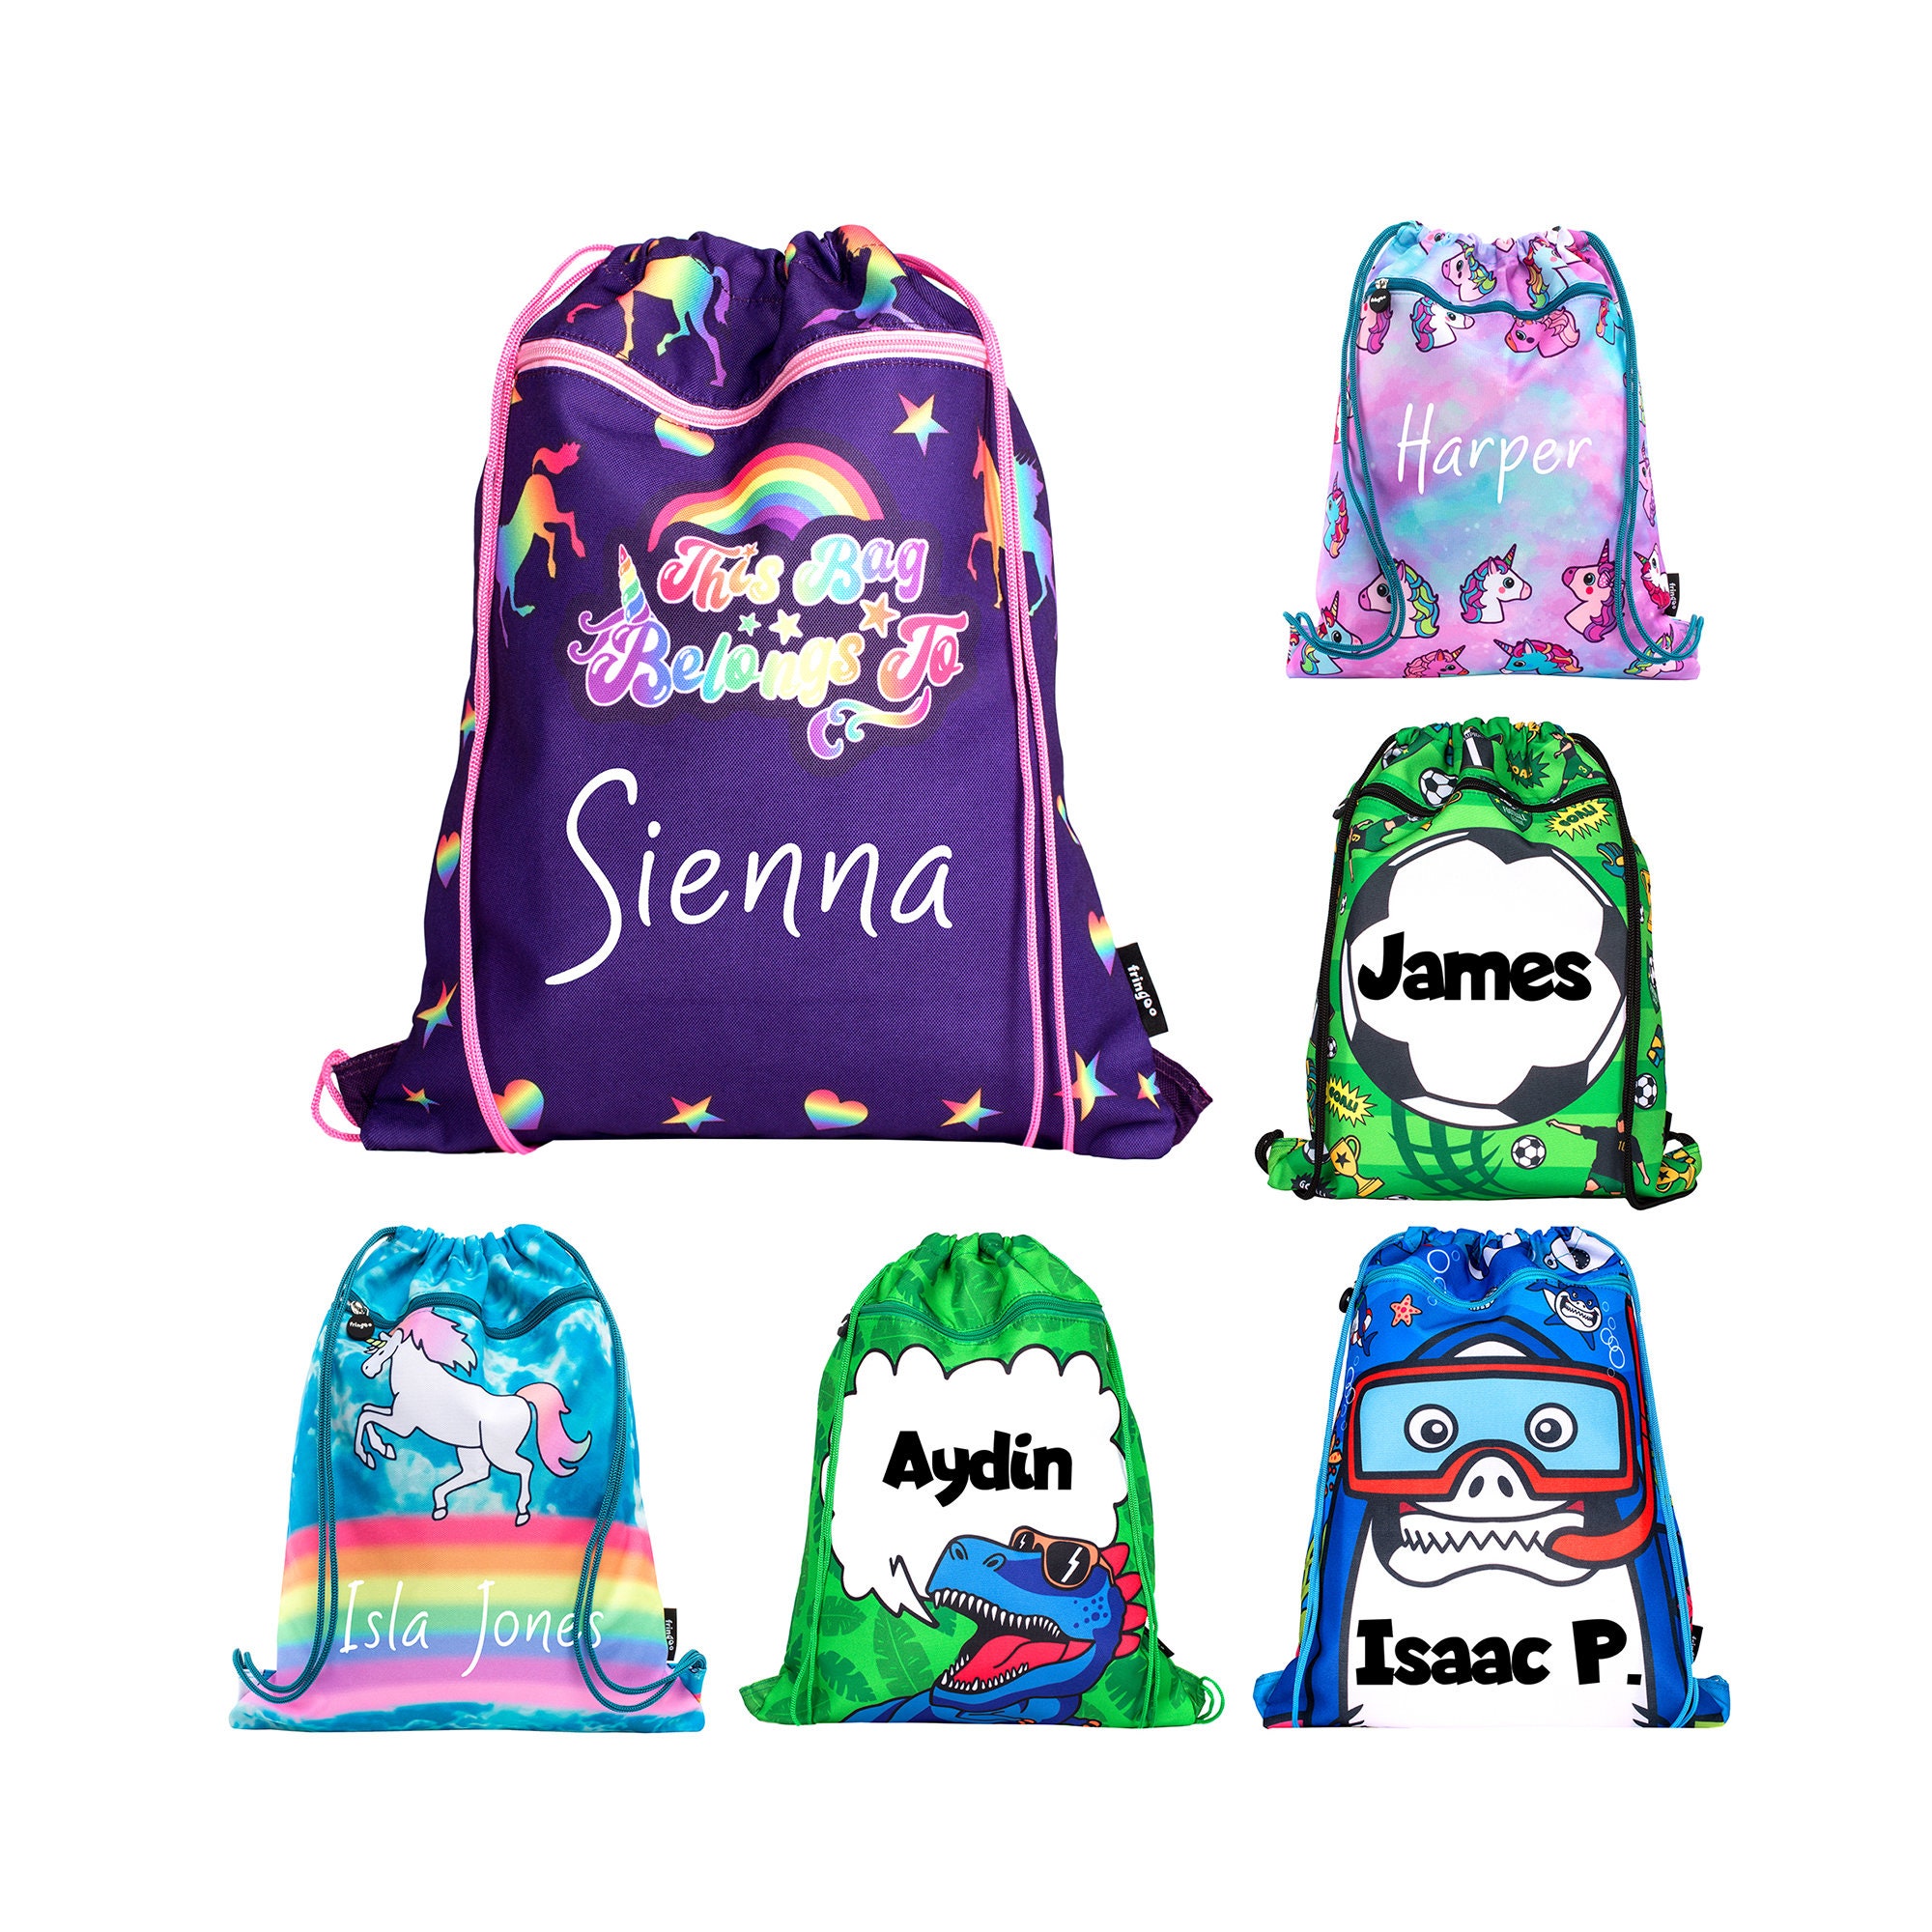 Aizawa Lew-is Capal-Di Collage Drawstring Bag Sport Gym Backpacks Storage Goodie Cinch Bag 